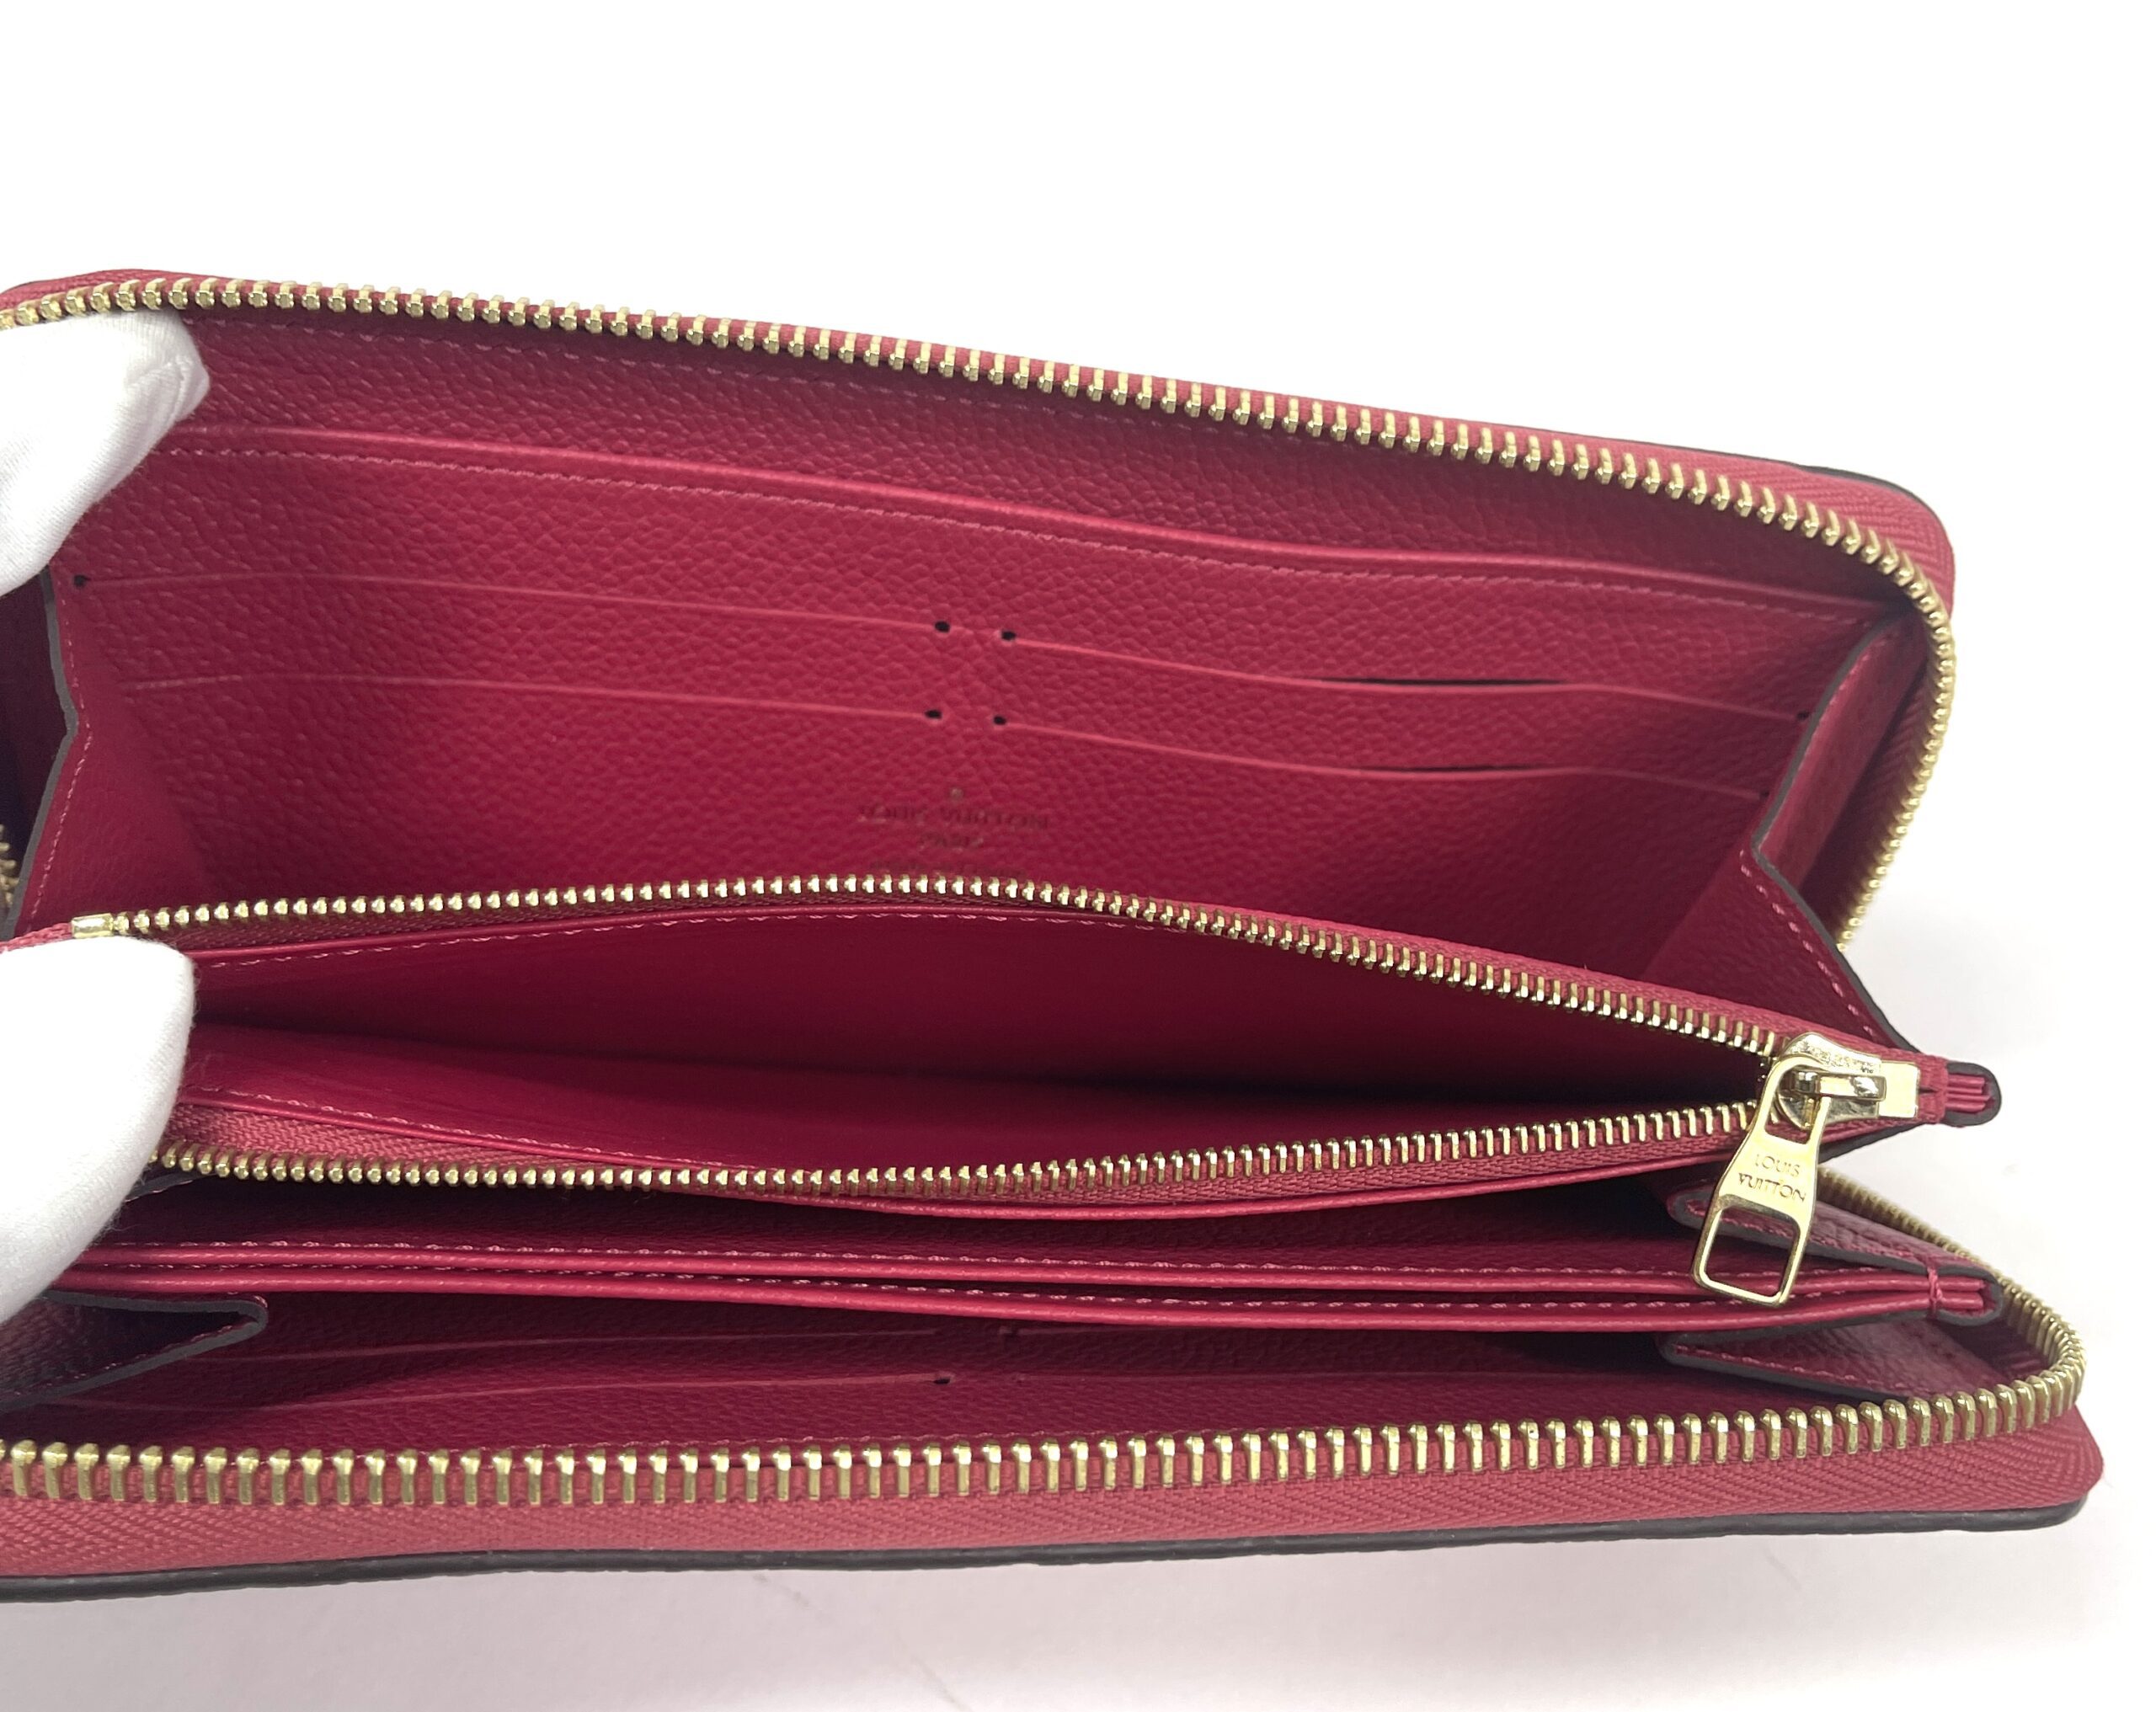 Louis Vuitton 2015 Empreinte Leather Wallet - Red Wallets